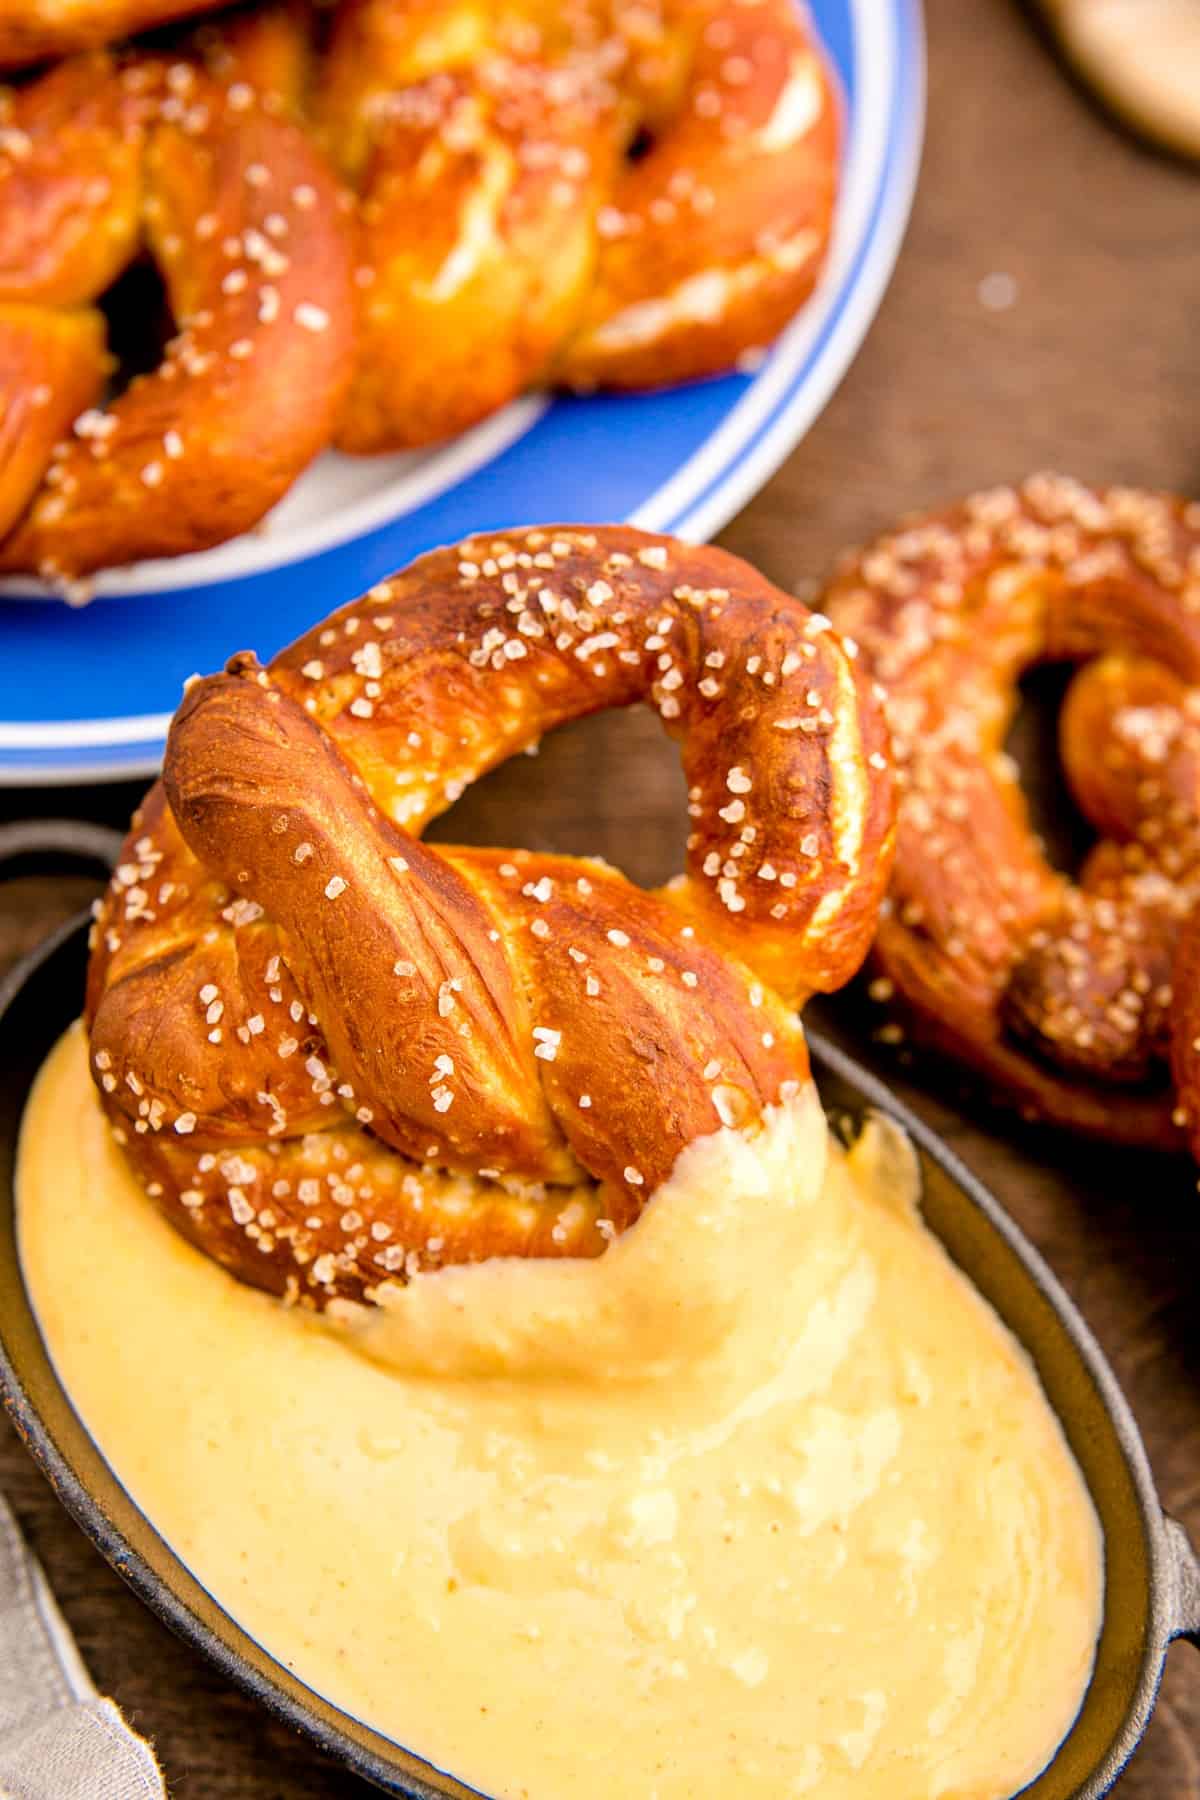 Soft pretzel dipping into cheese dip